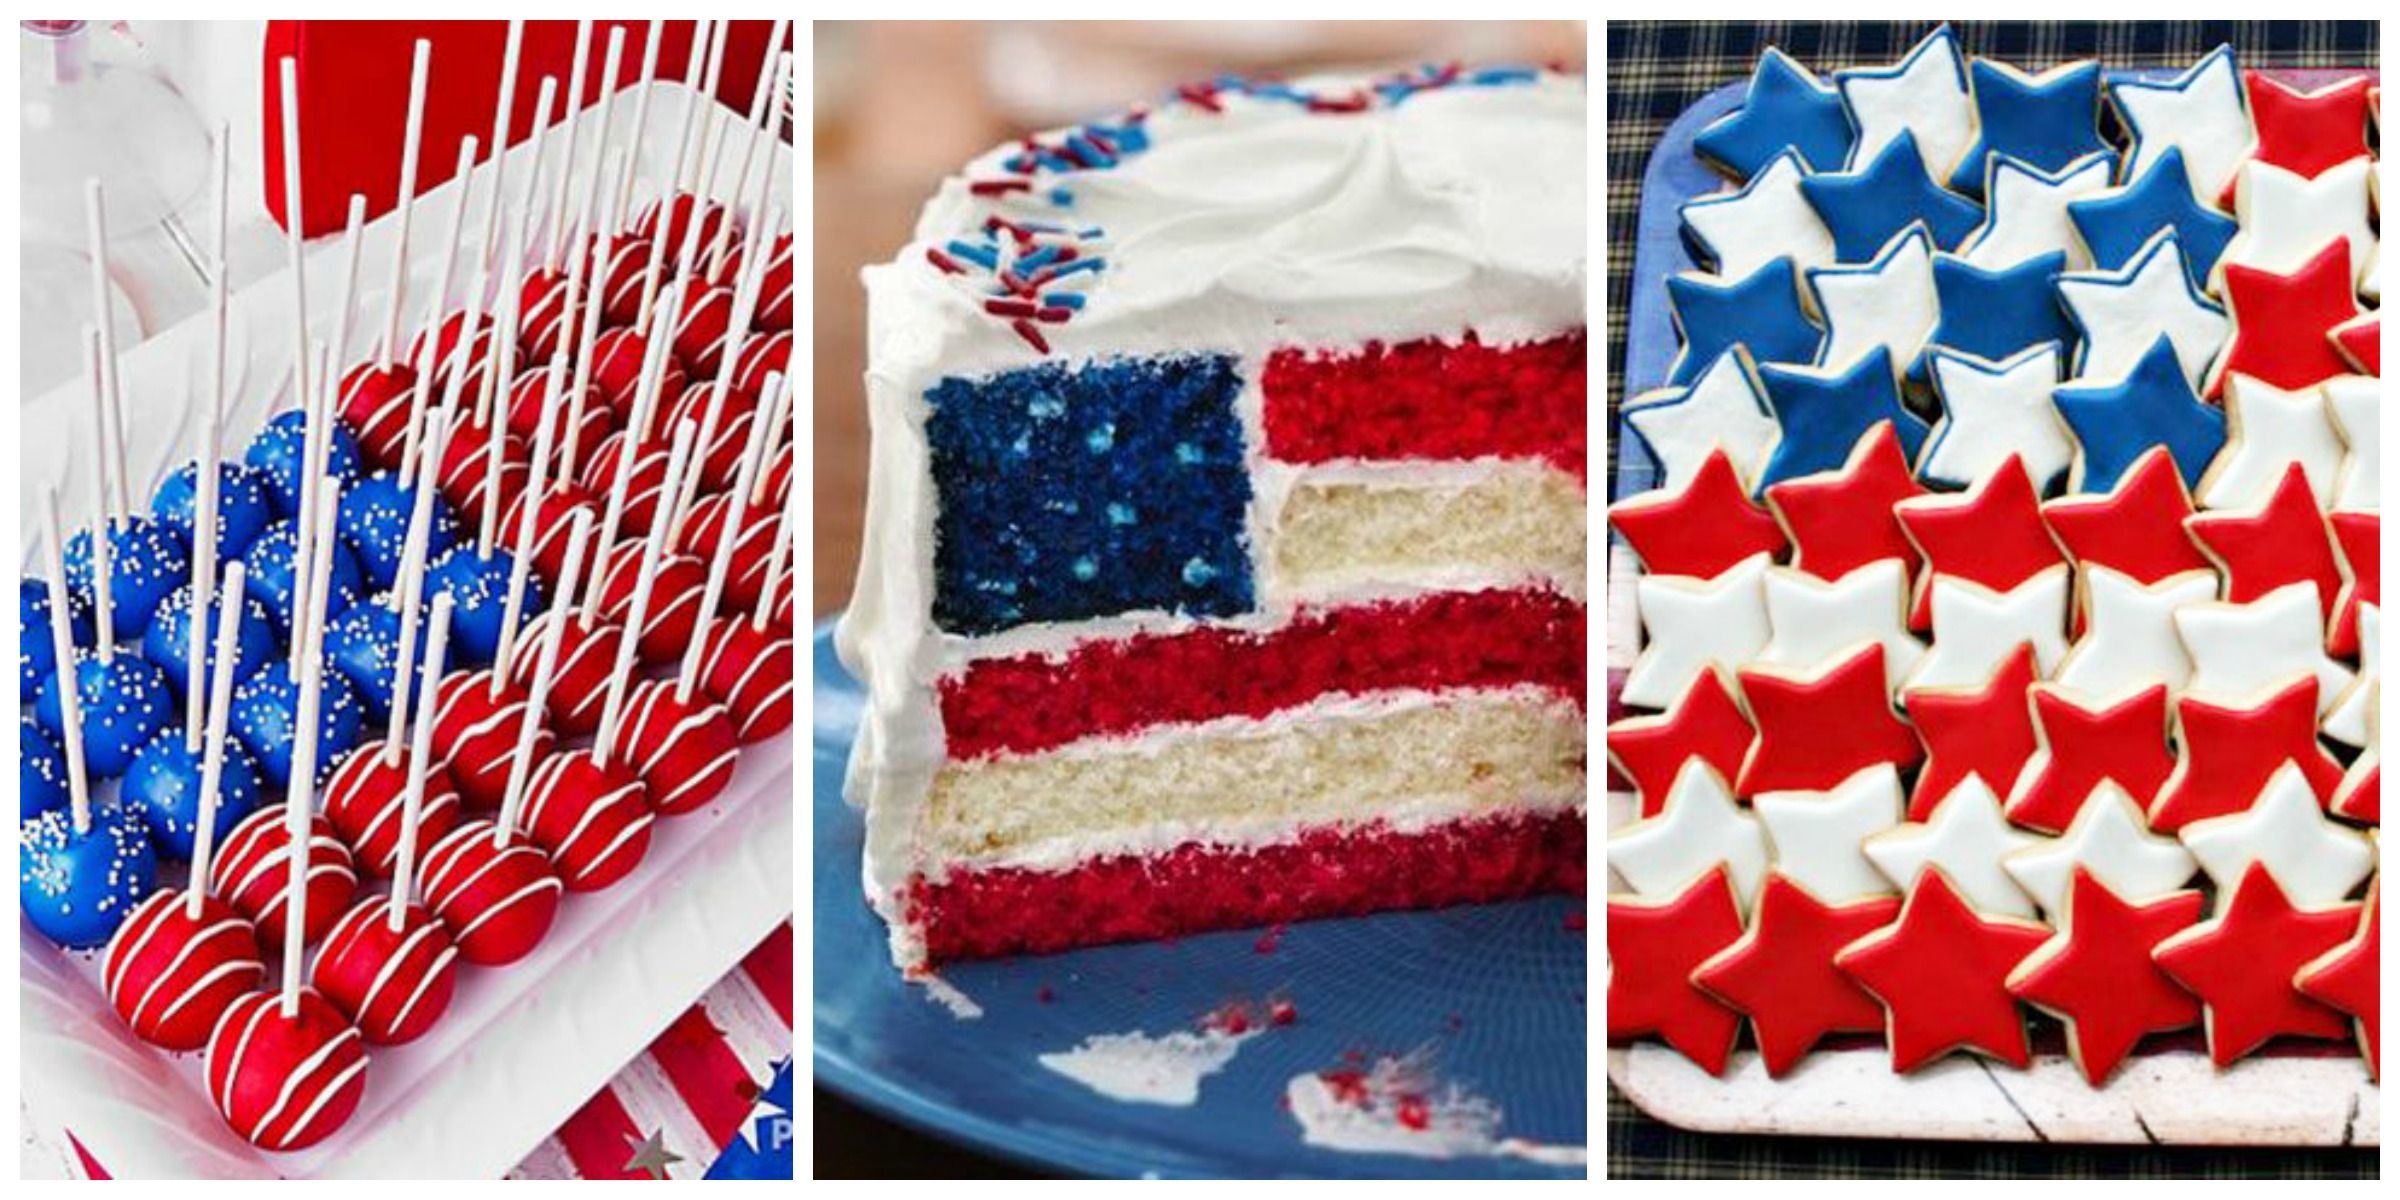 American flag food images vectorielles, American flag food